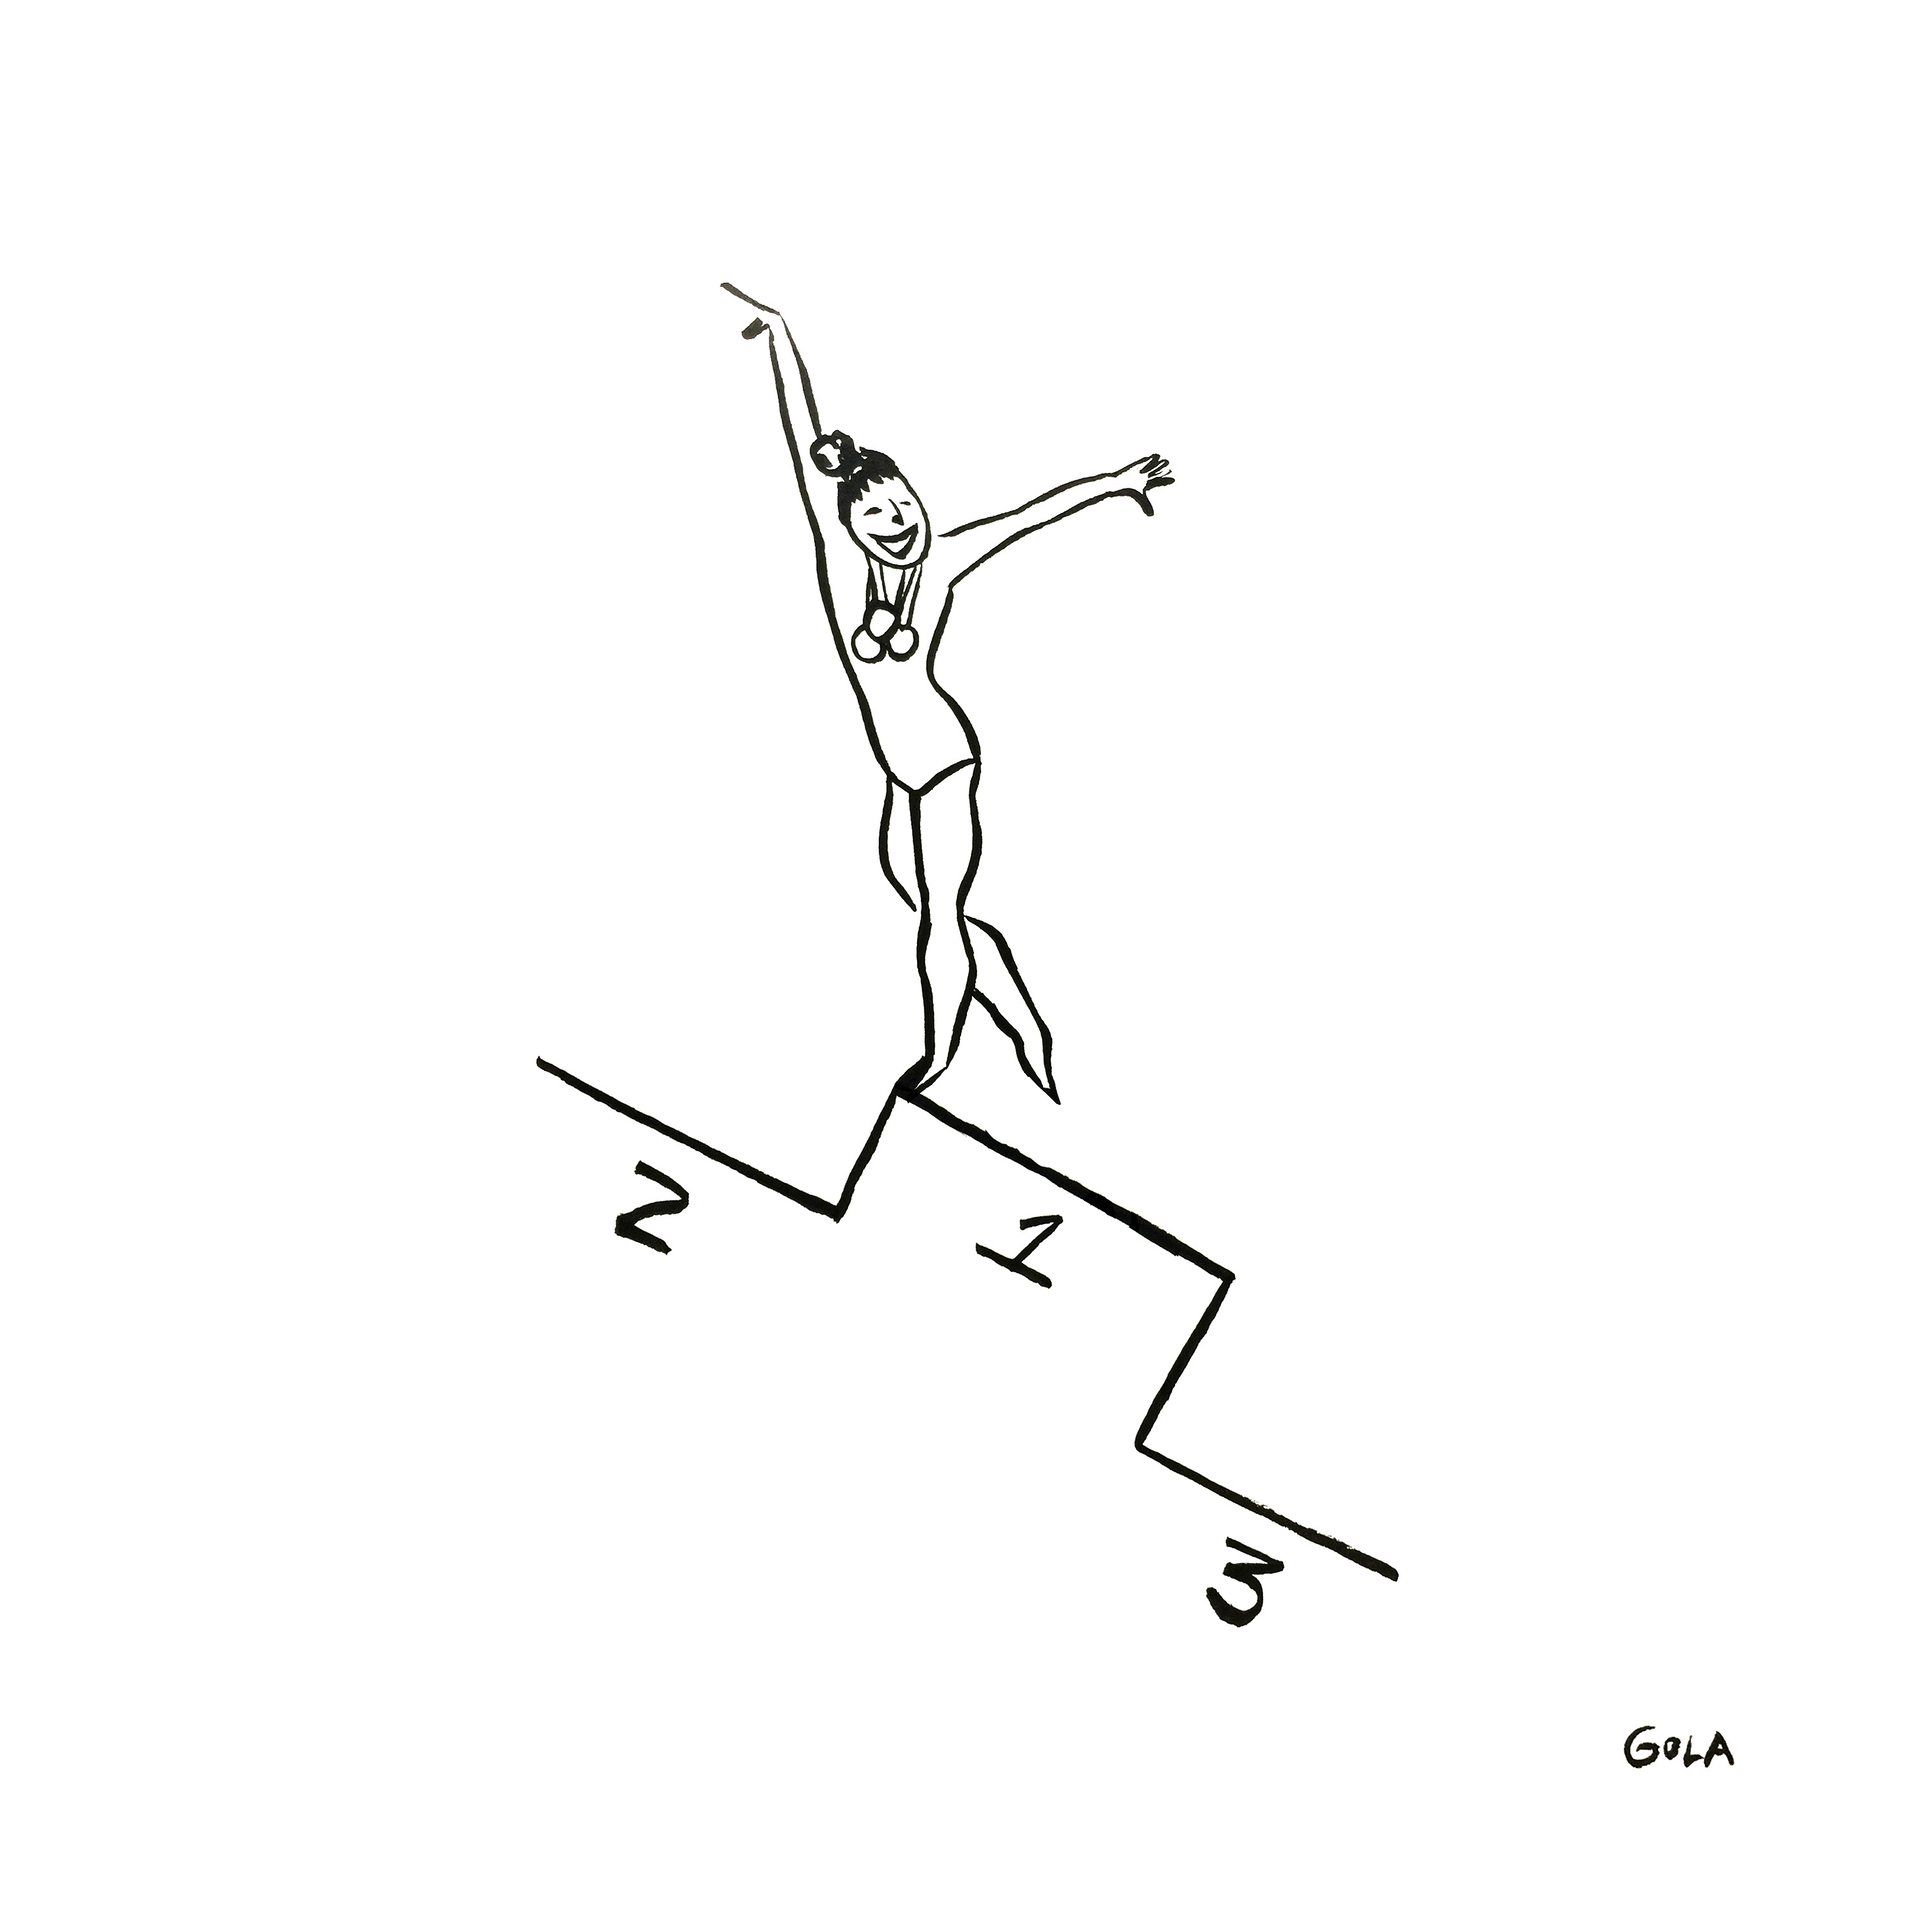 Simone Biles. The balance queen_Los Juegos Olímpicos visto por el artista brasileño André Gola FeelCurioso